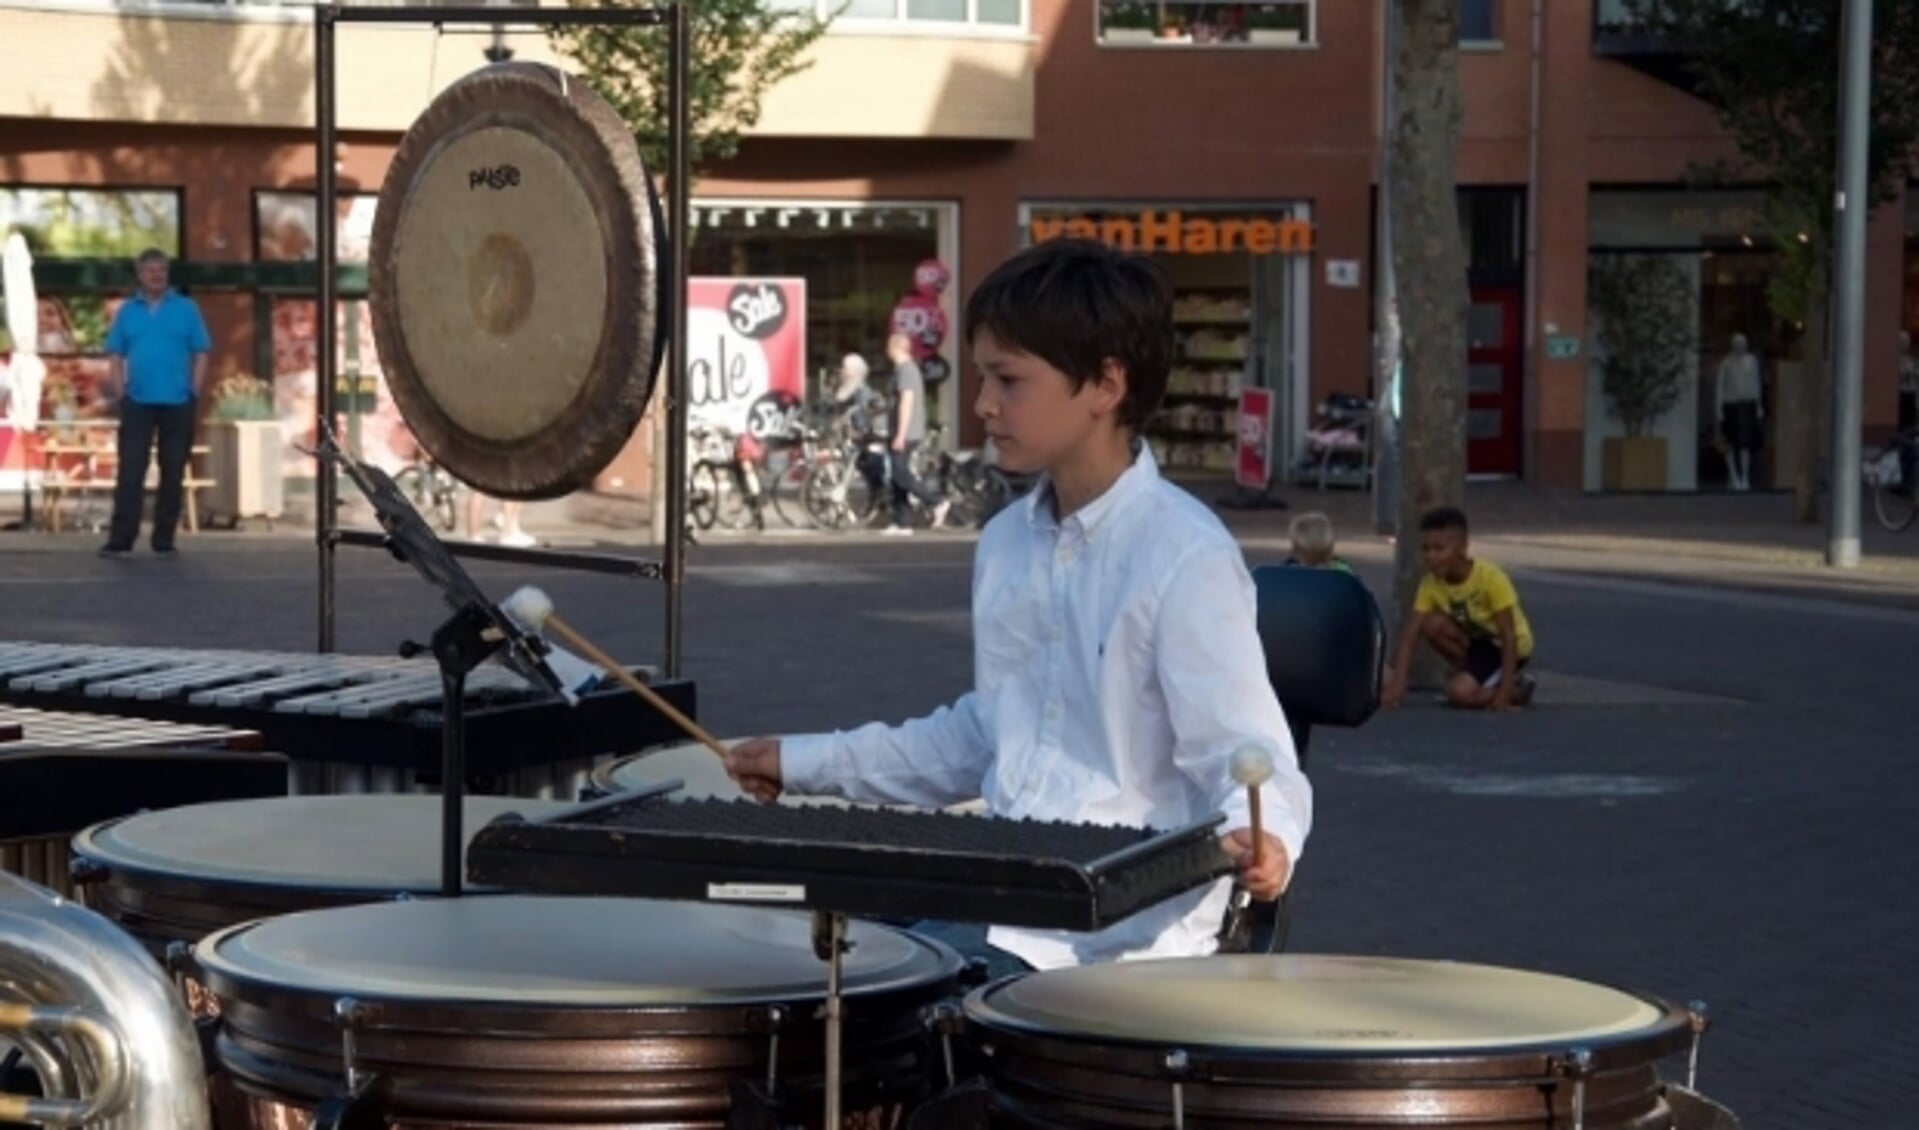 Leren drummen via de harmonie Caecilia in Veenendaal. (Foto: PR)